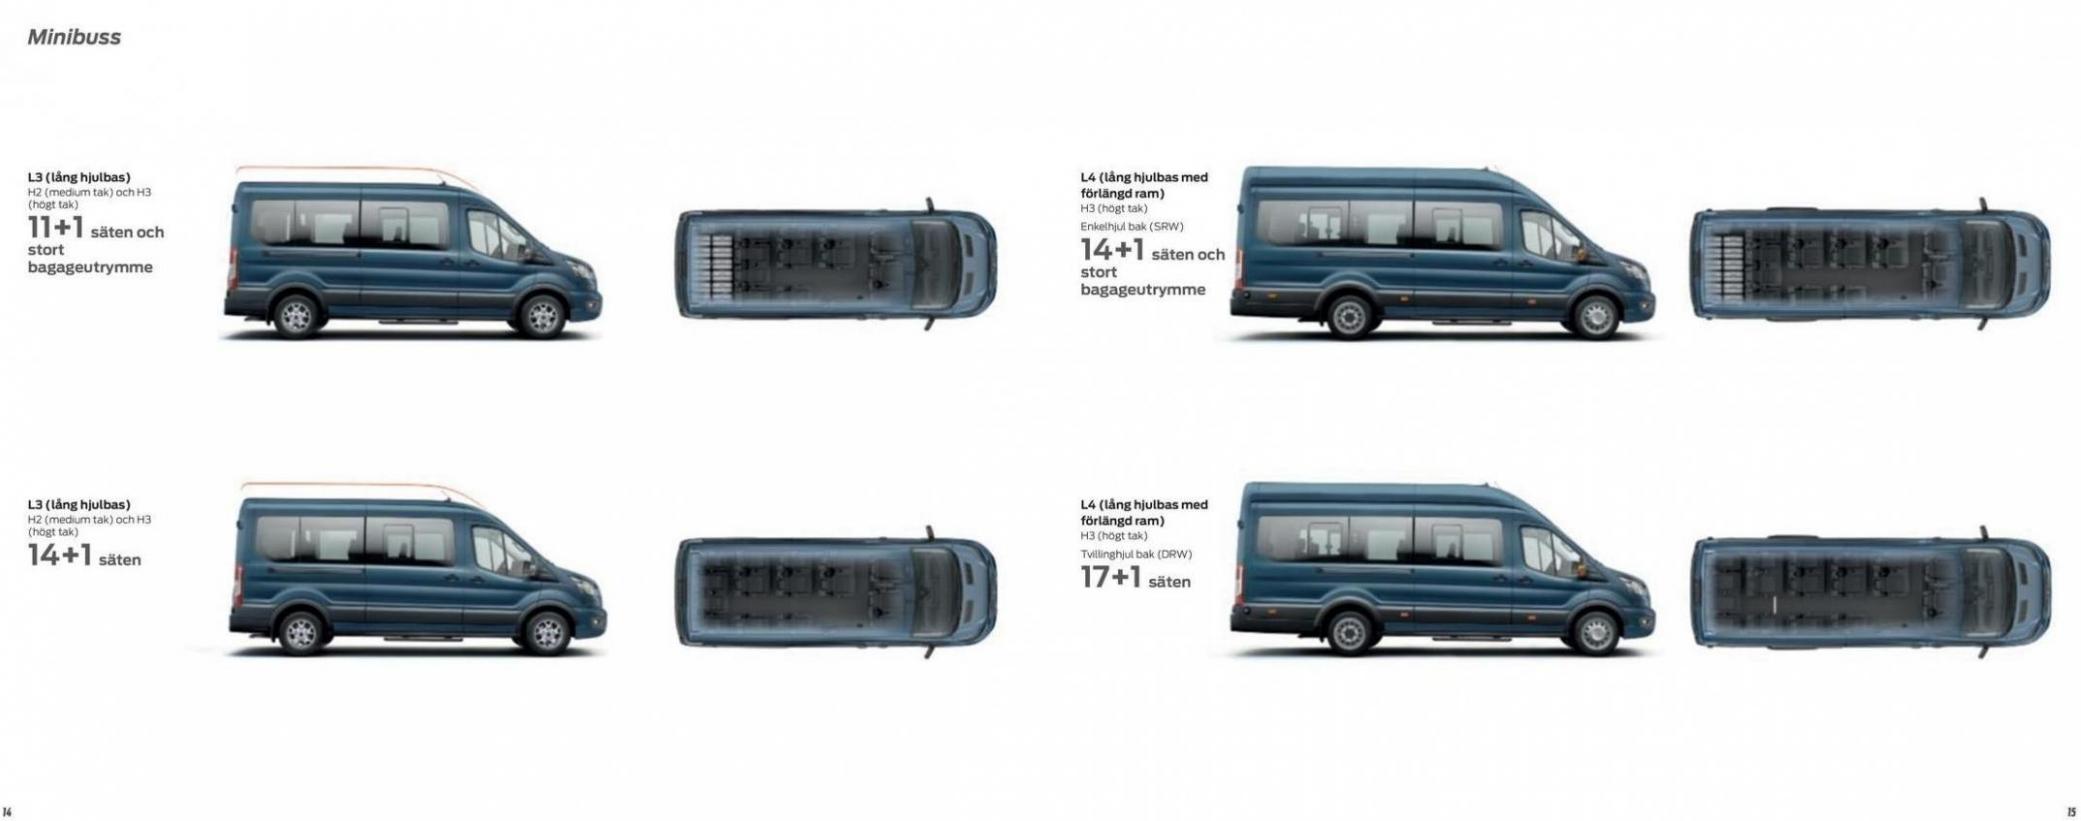 Transit minibuss price list !. Page 9